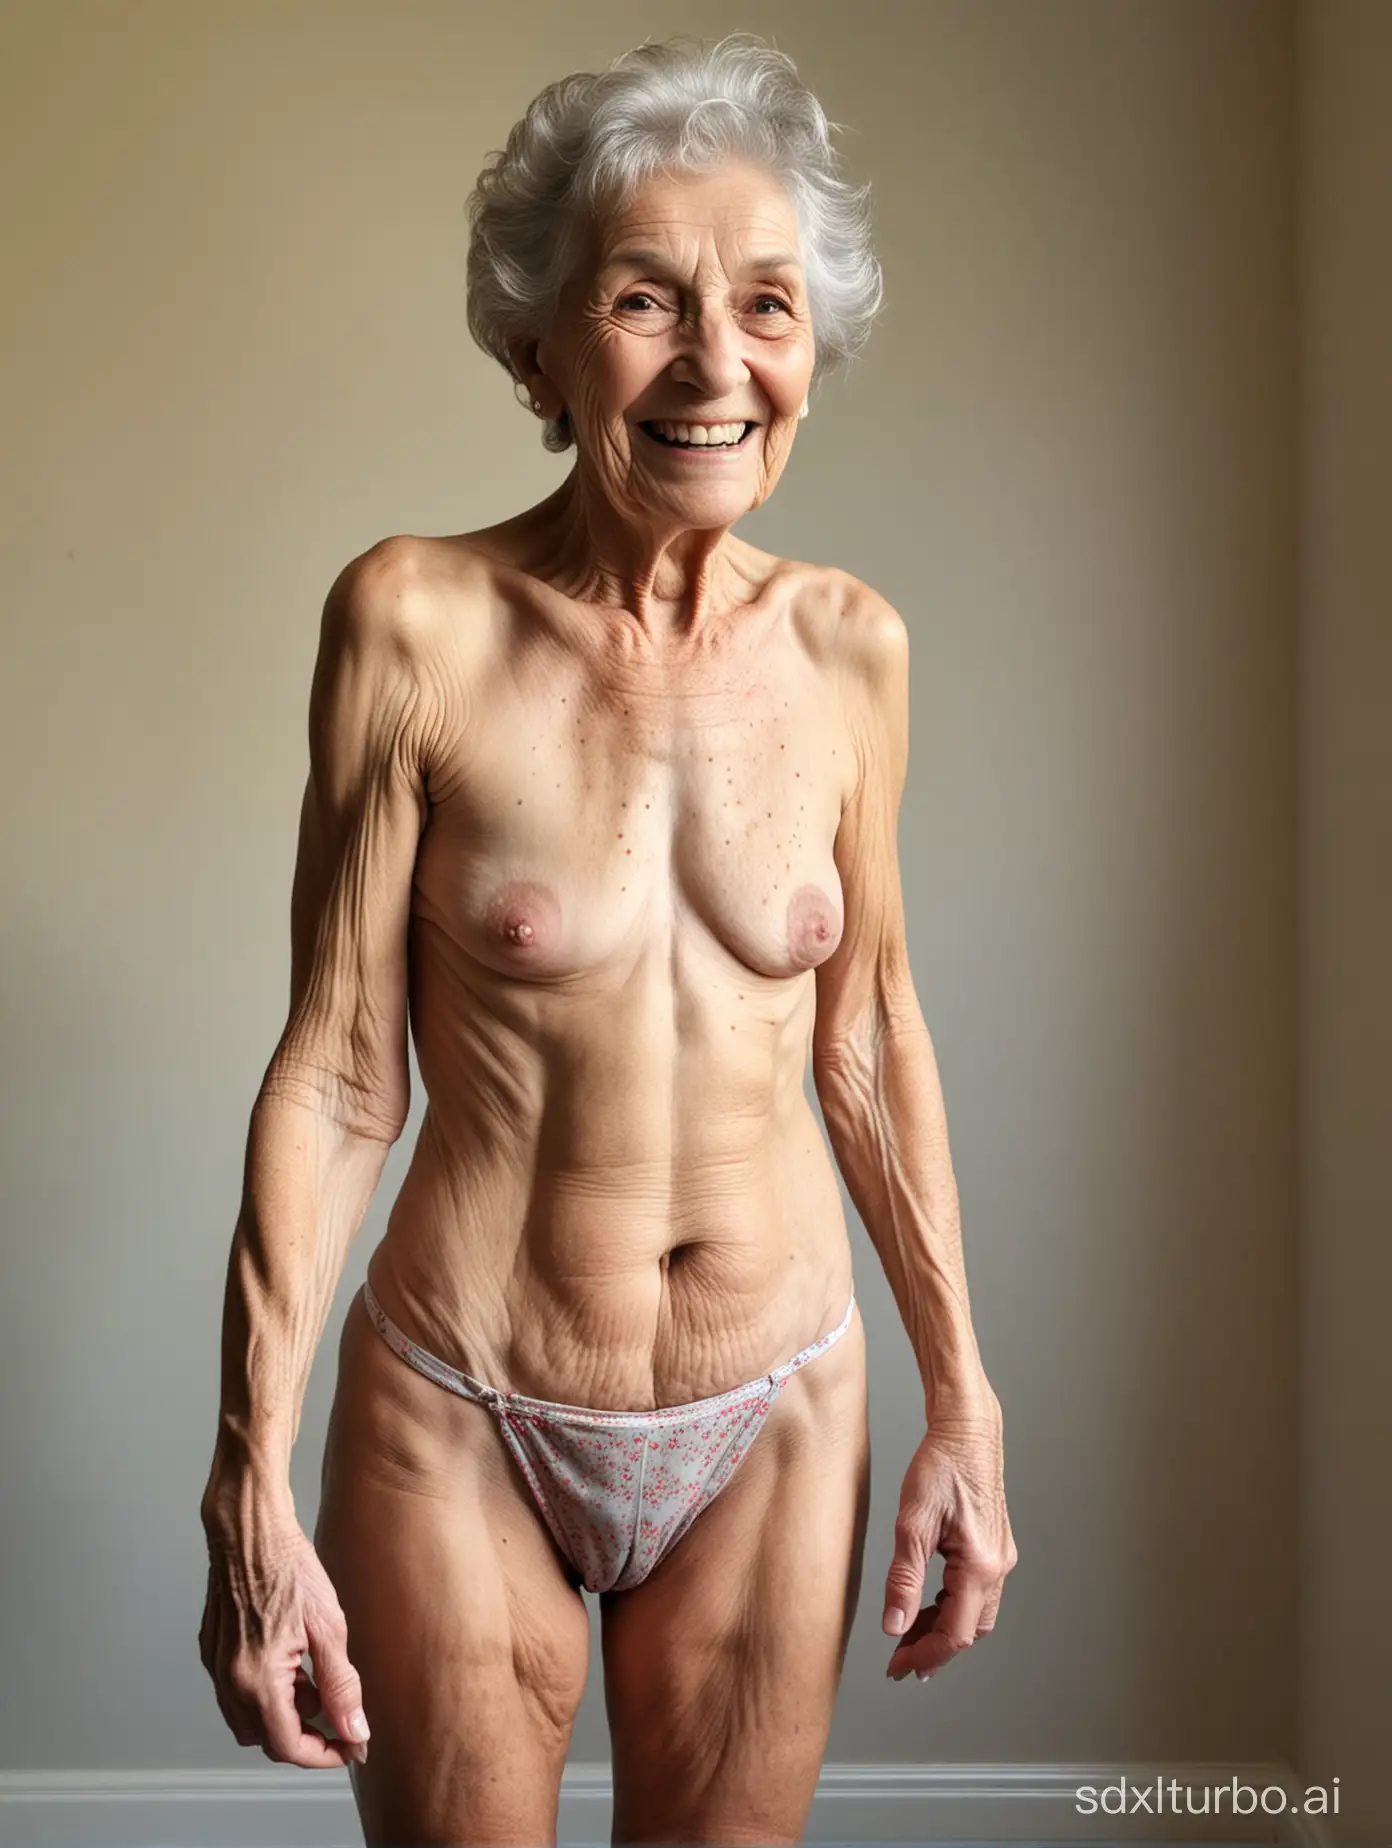 Smiling-Centenarian-Grandma-with-Exposed-Backside